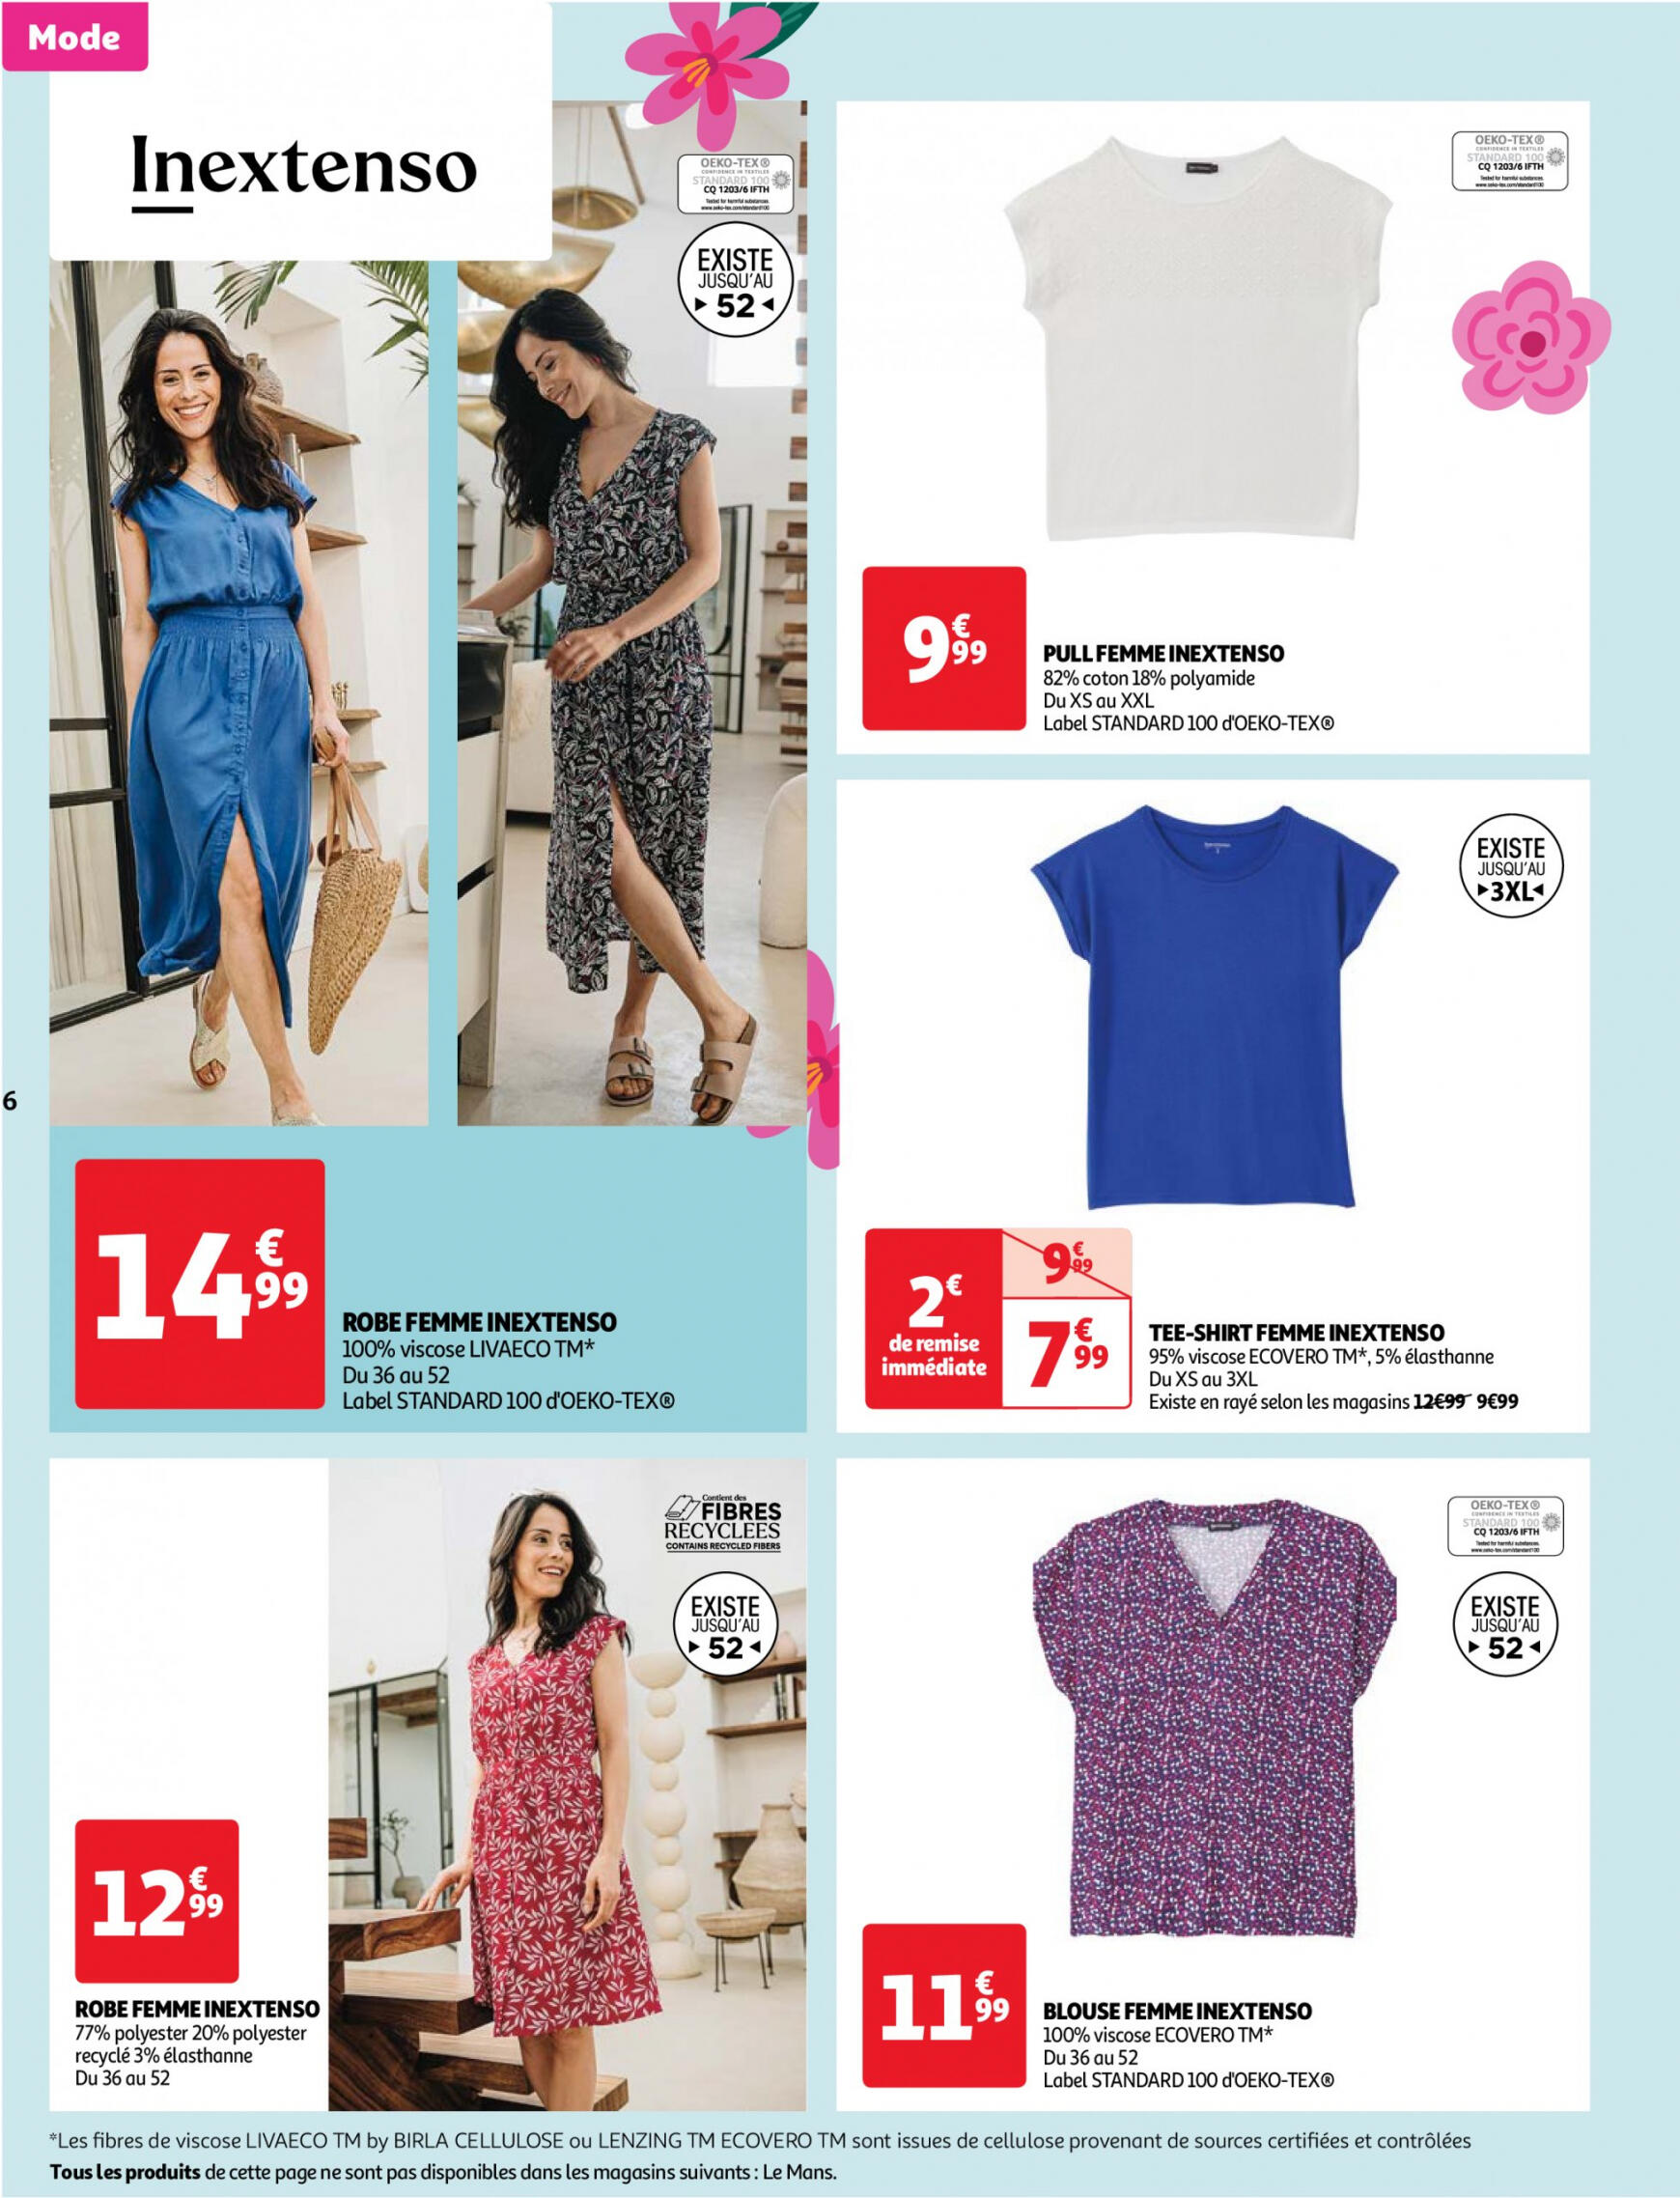 auchan - Prospectus Auchan - Merci maman actuel 14.05. - 26.05. - page: 6